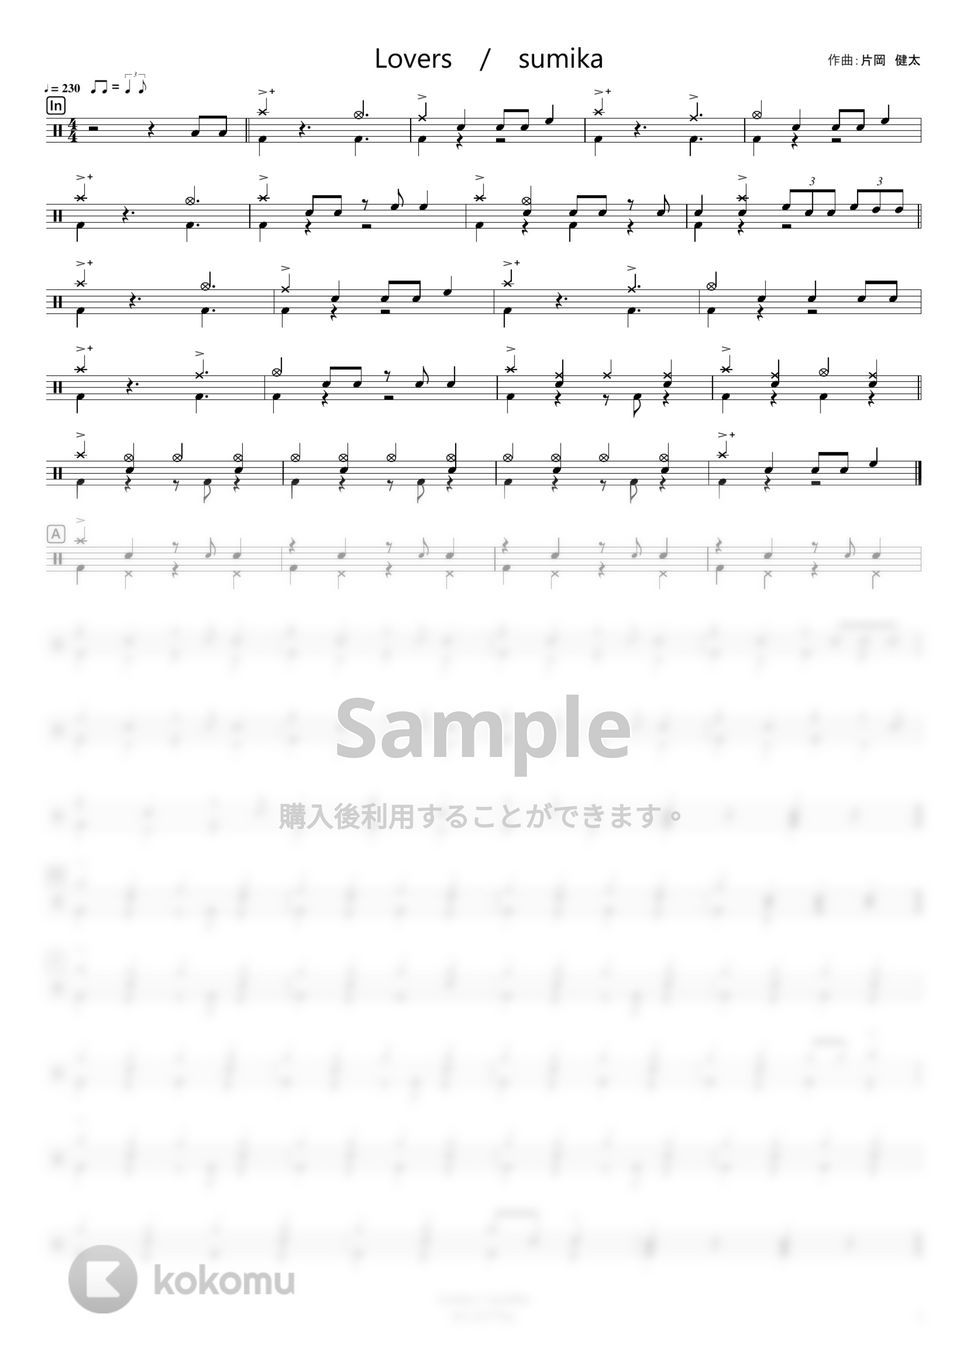 sumika - Lovers by さくっとドラム